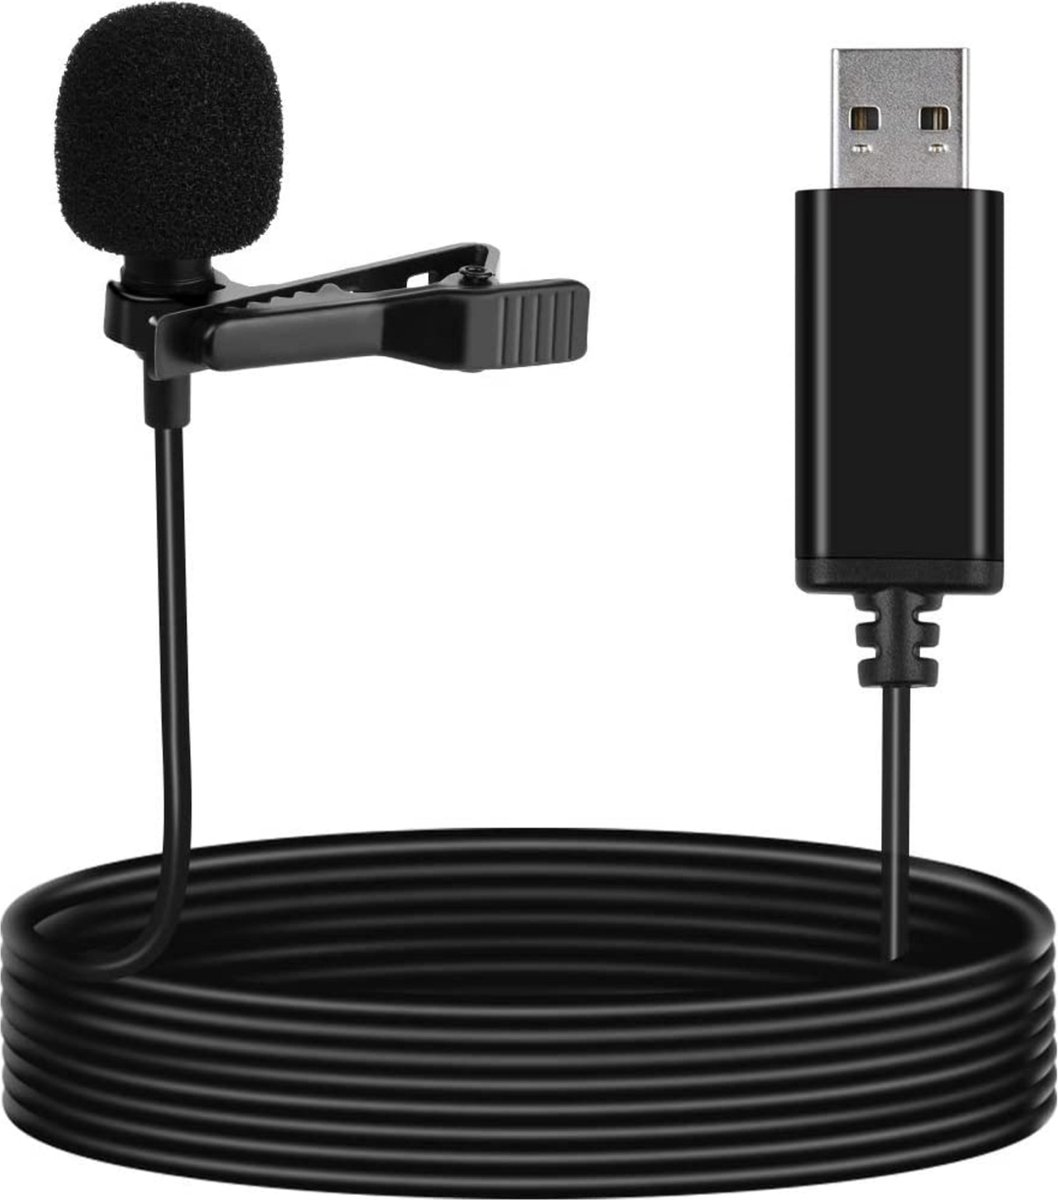 Microfoon met USB Aansluiting - Lavalier Lapel clip mic recording, 145cm kabel lengte